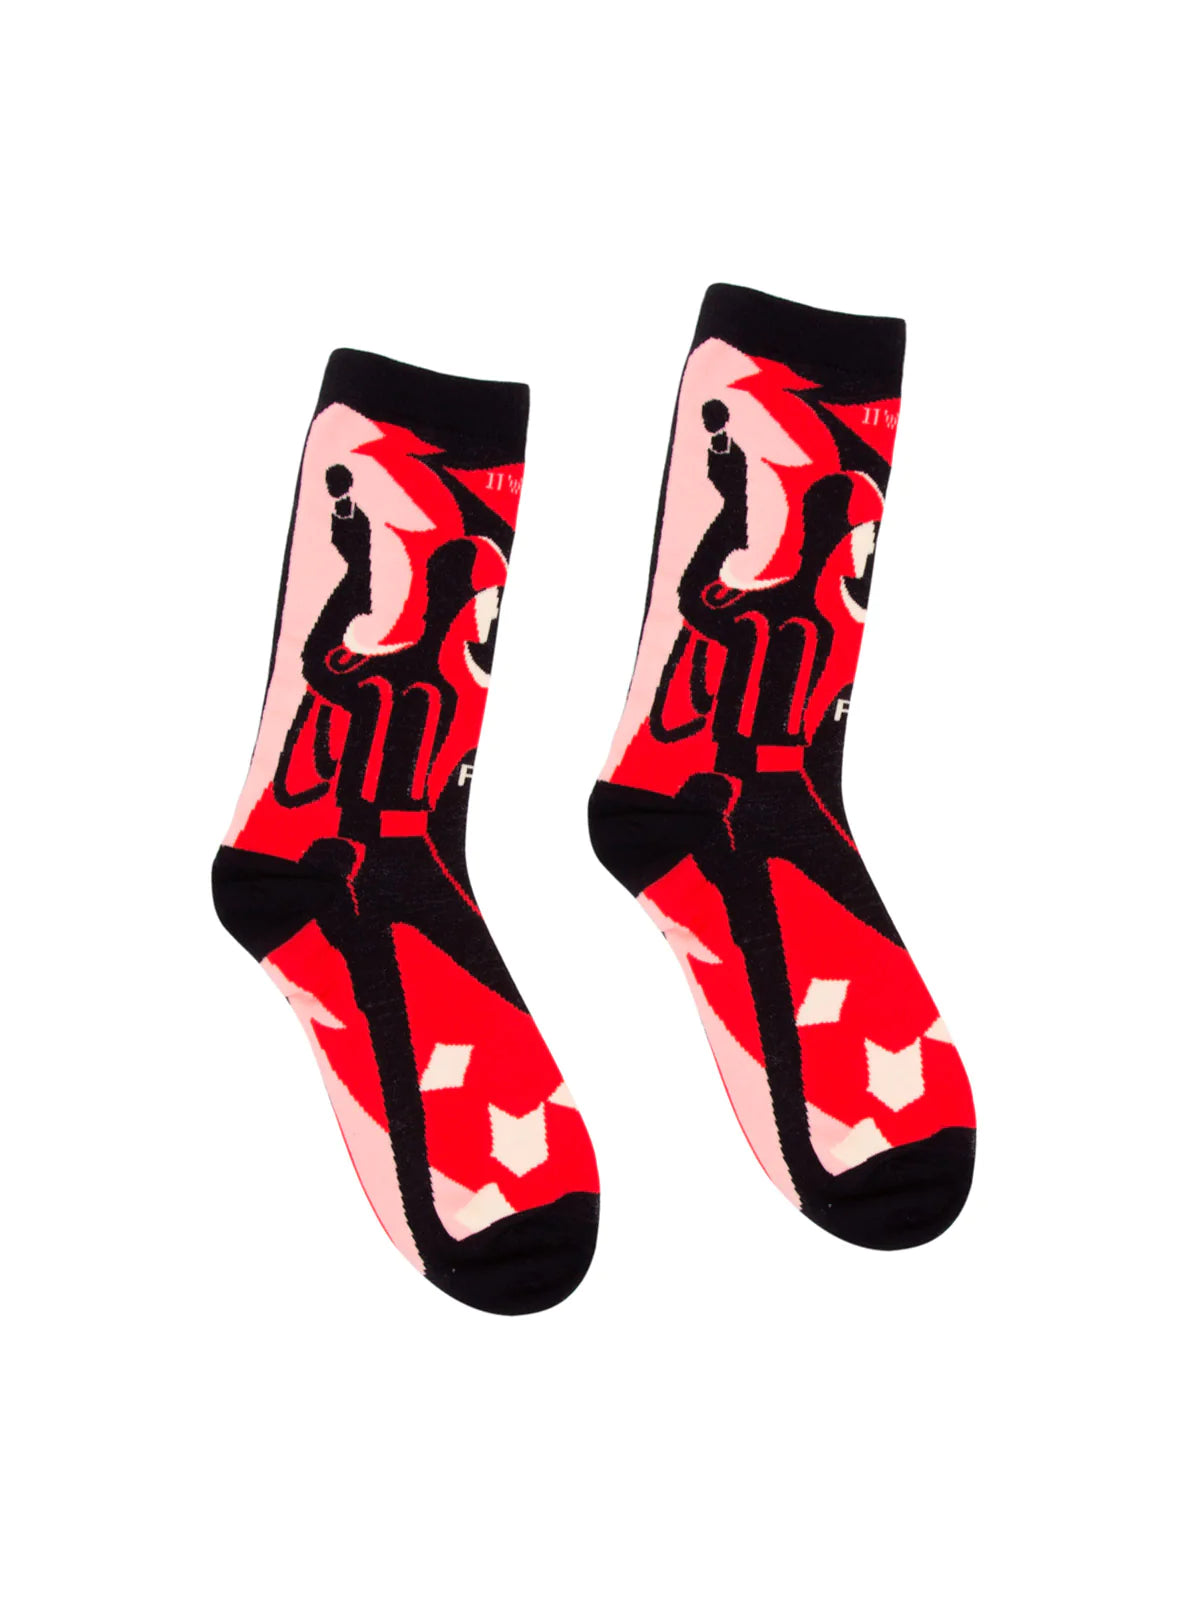 Fahrenheit 451 Socks Unisex - Large gift socks socks